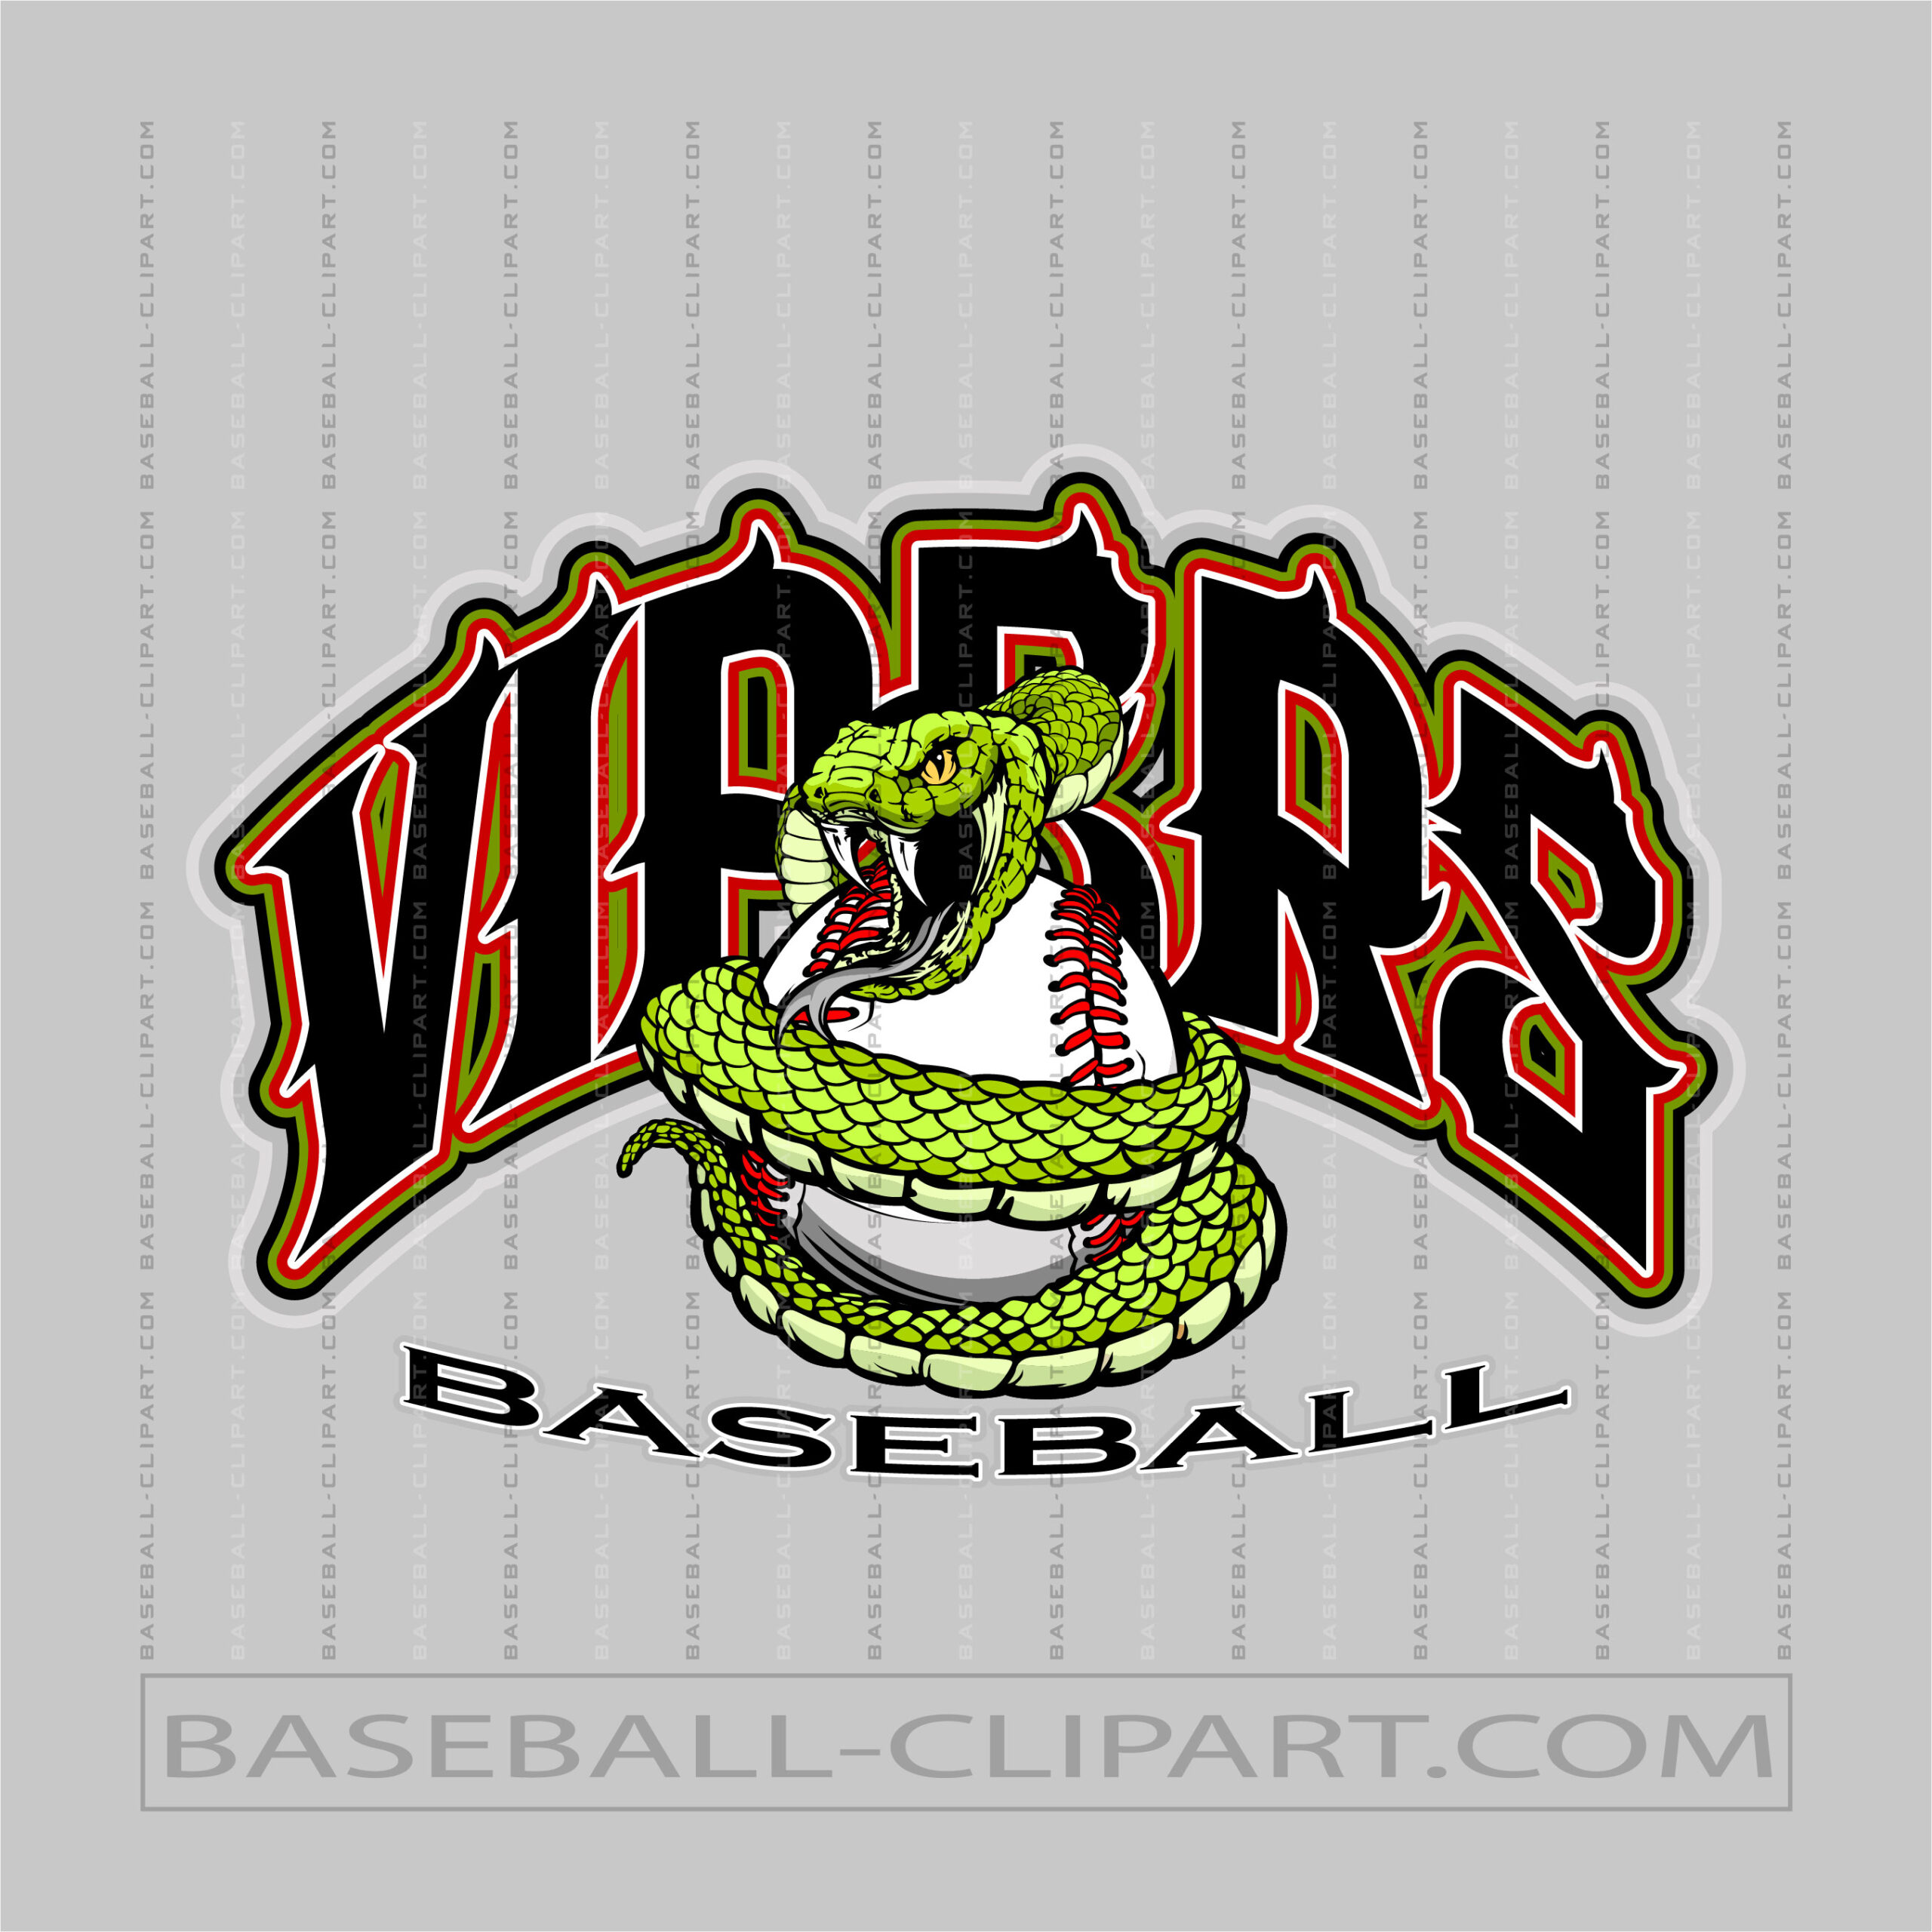 Baseball Vipers Clip Art